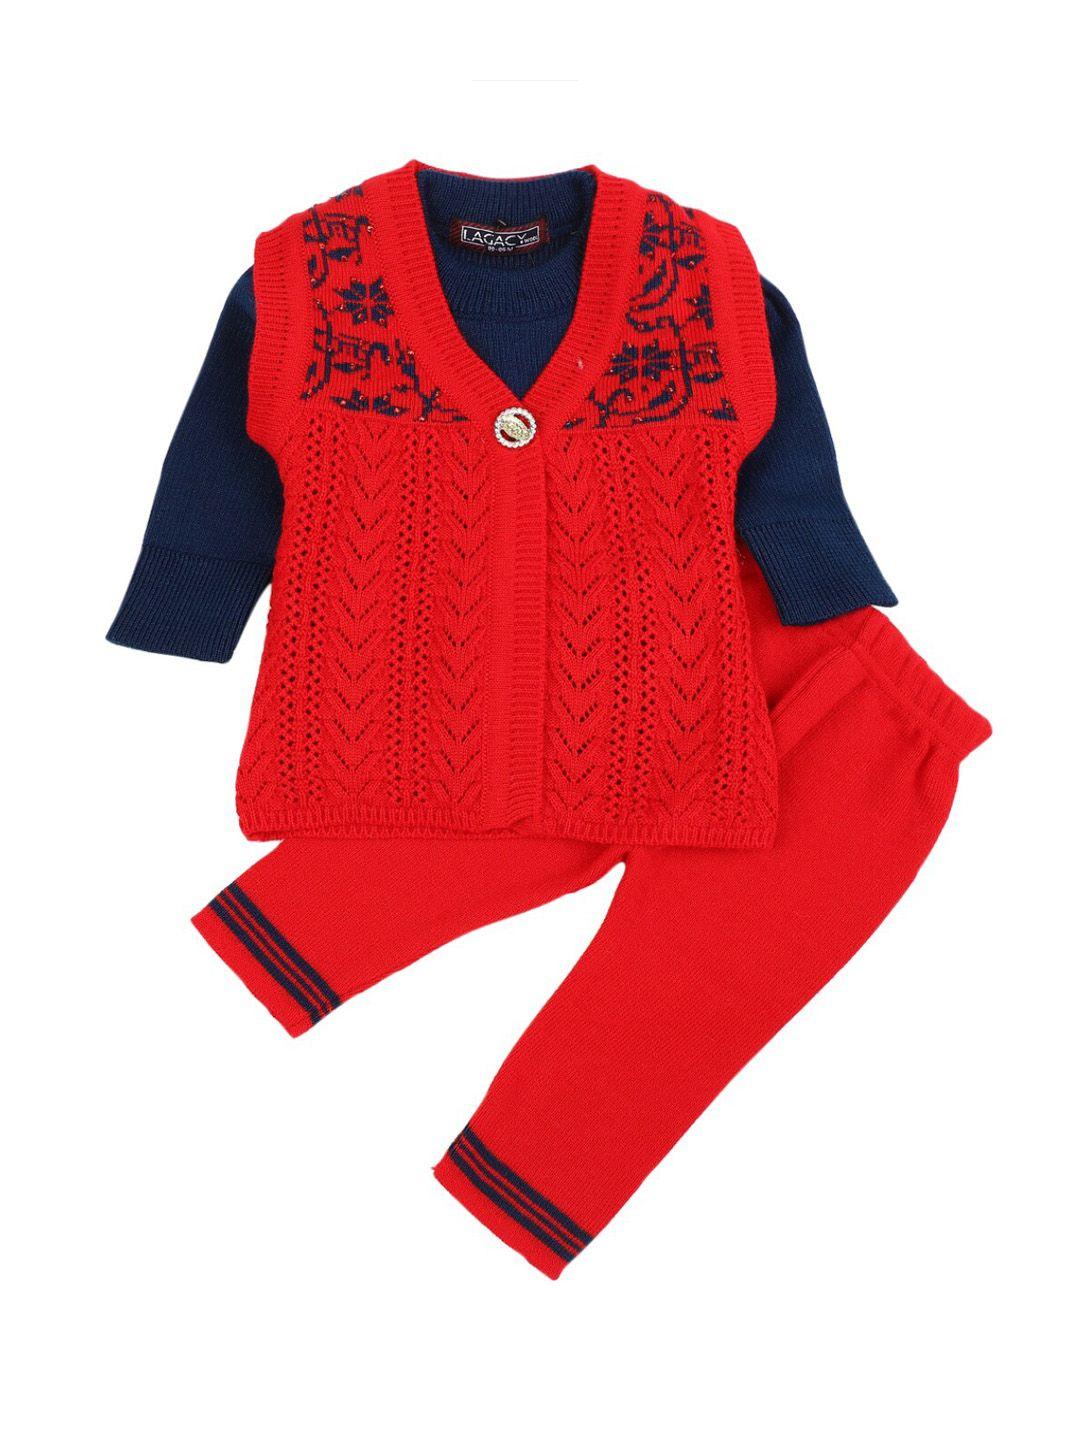 v-mart-unisex-kids-red-cotton-clothing-set